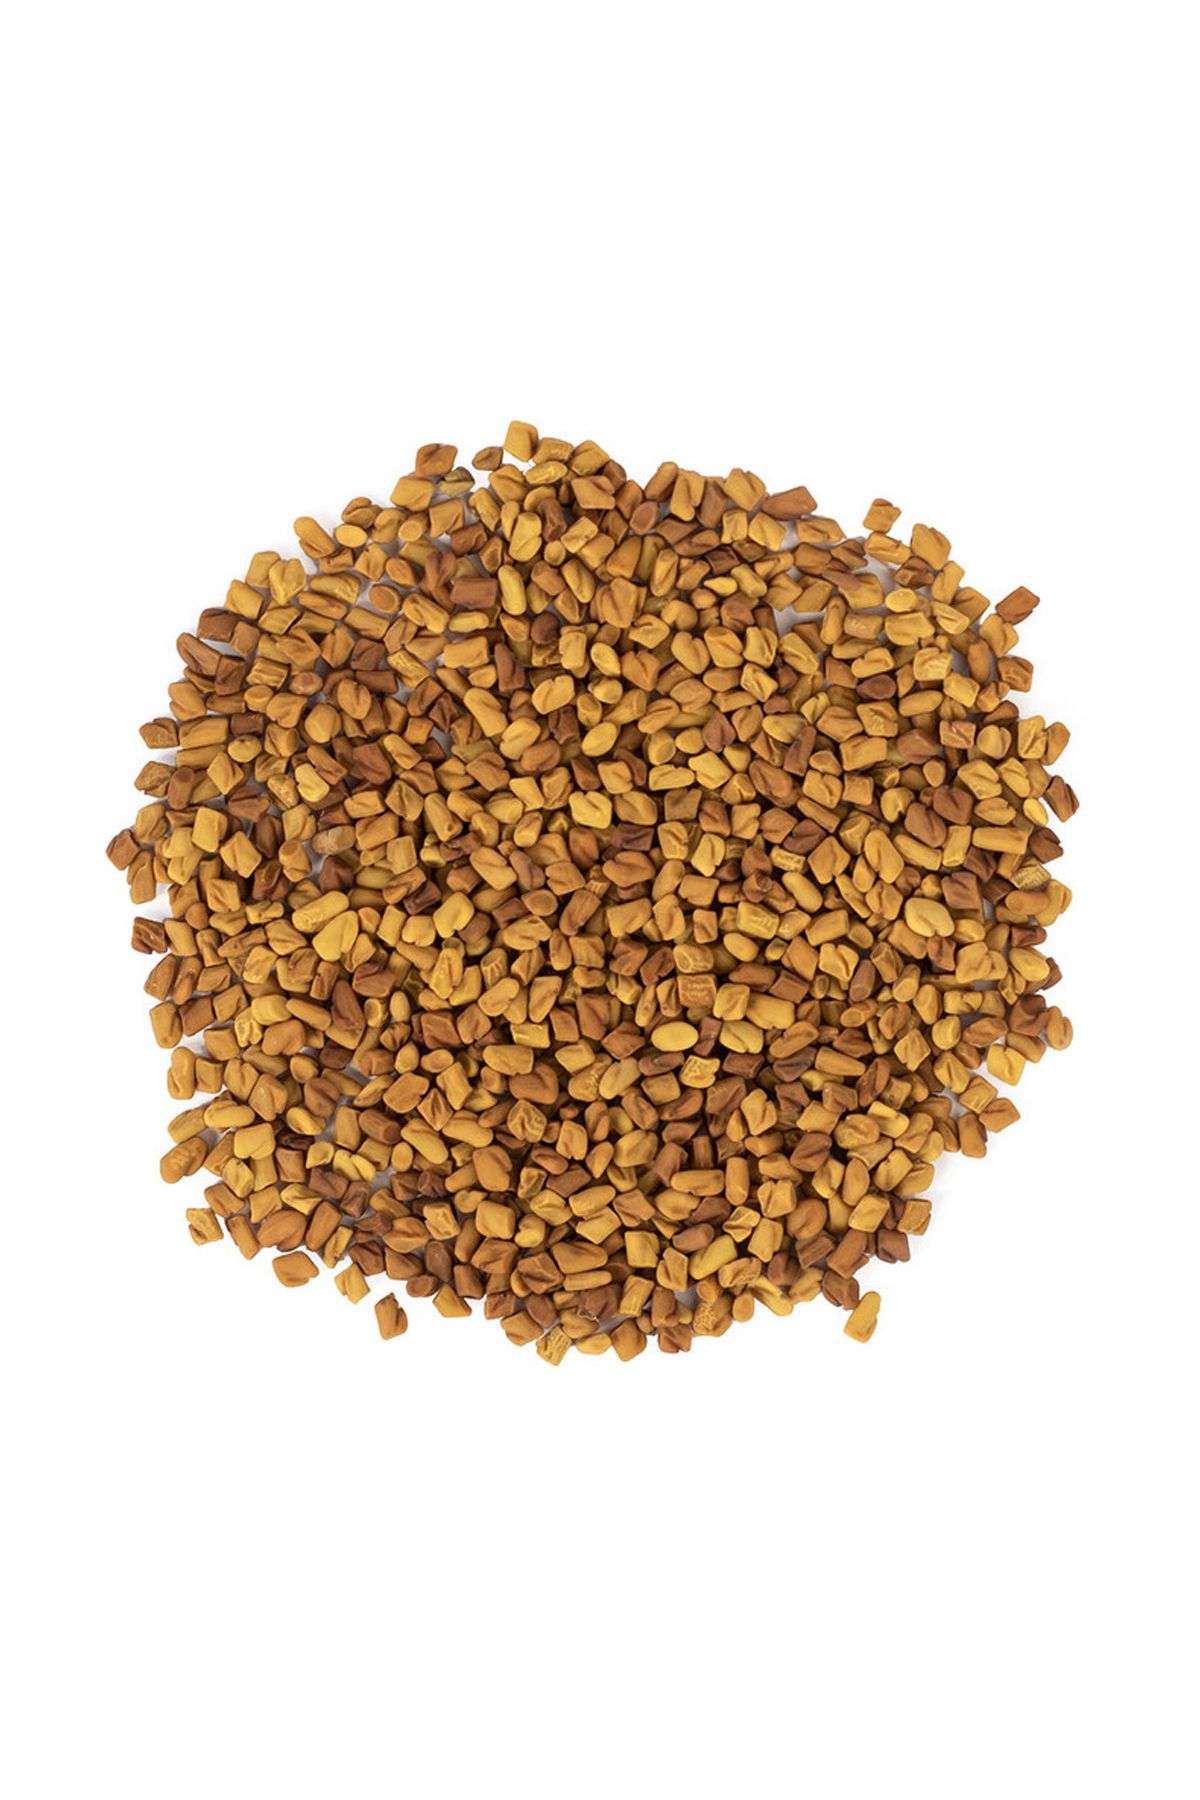 SELNUS Çemen Tohumu 75 gram Tane Çaman Otu ( Trigonella Foenum-graecum ) ( Semen Foenugraeci )